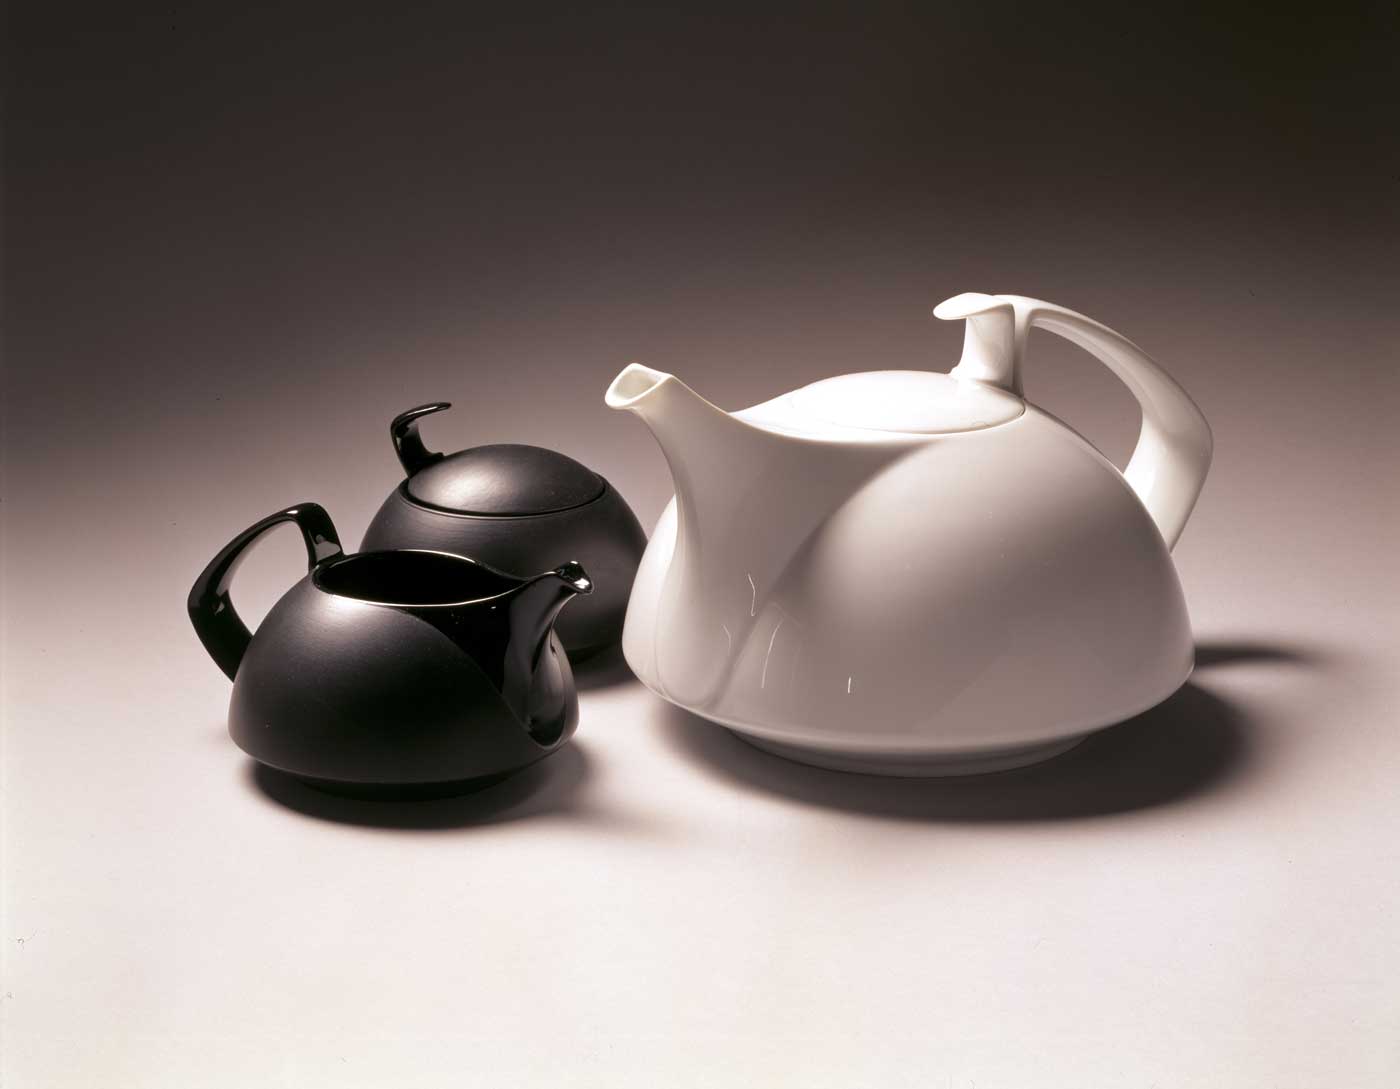 An angular, modernist white teapot next to two smaller black teapots of similar style.